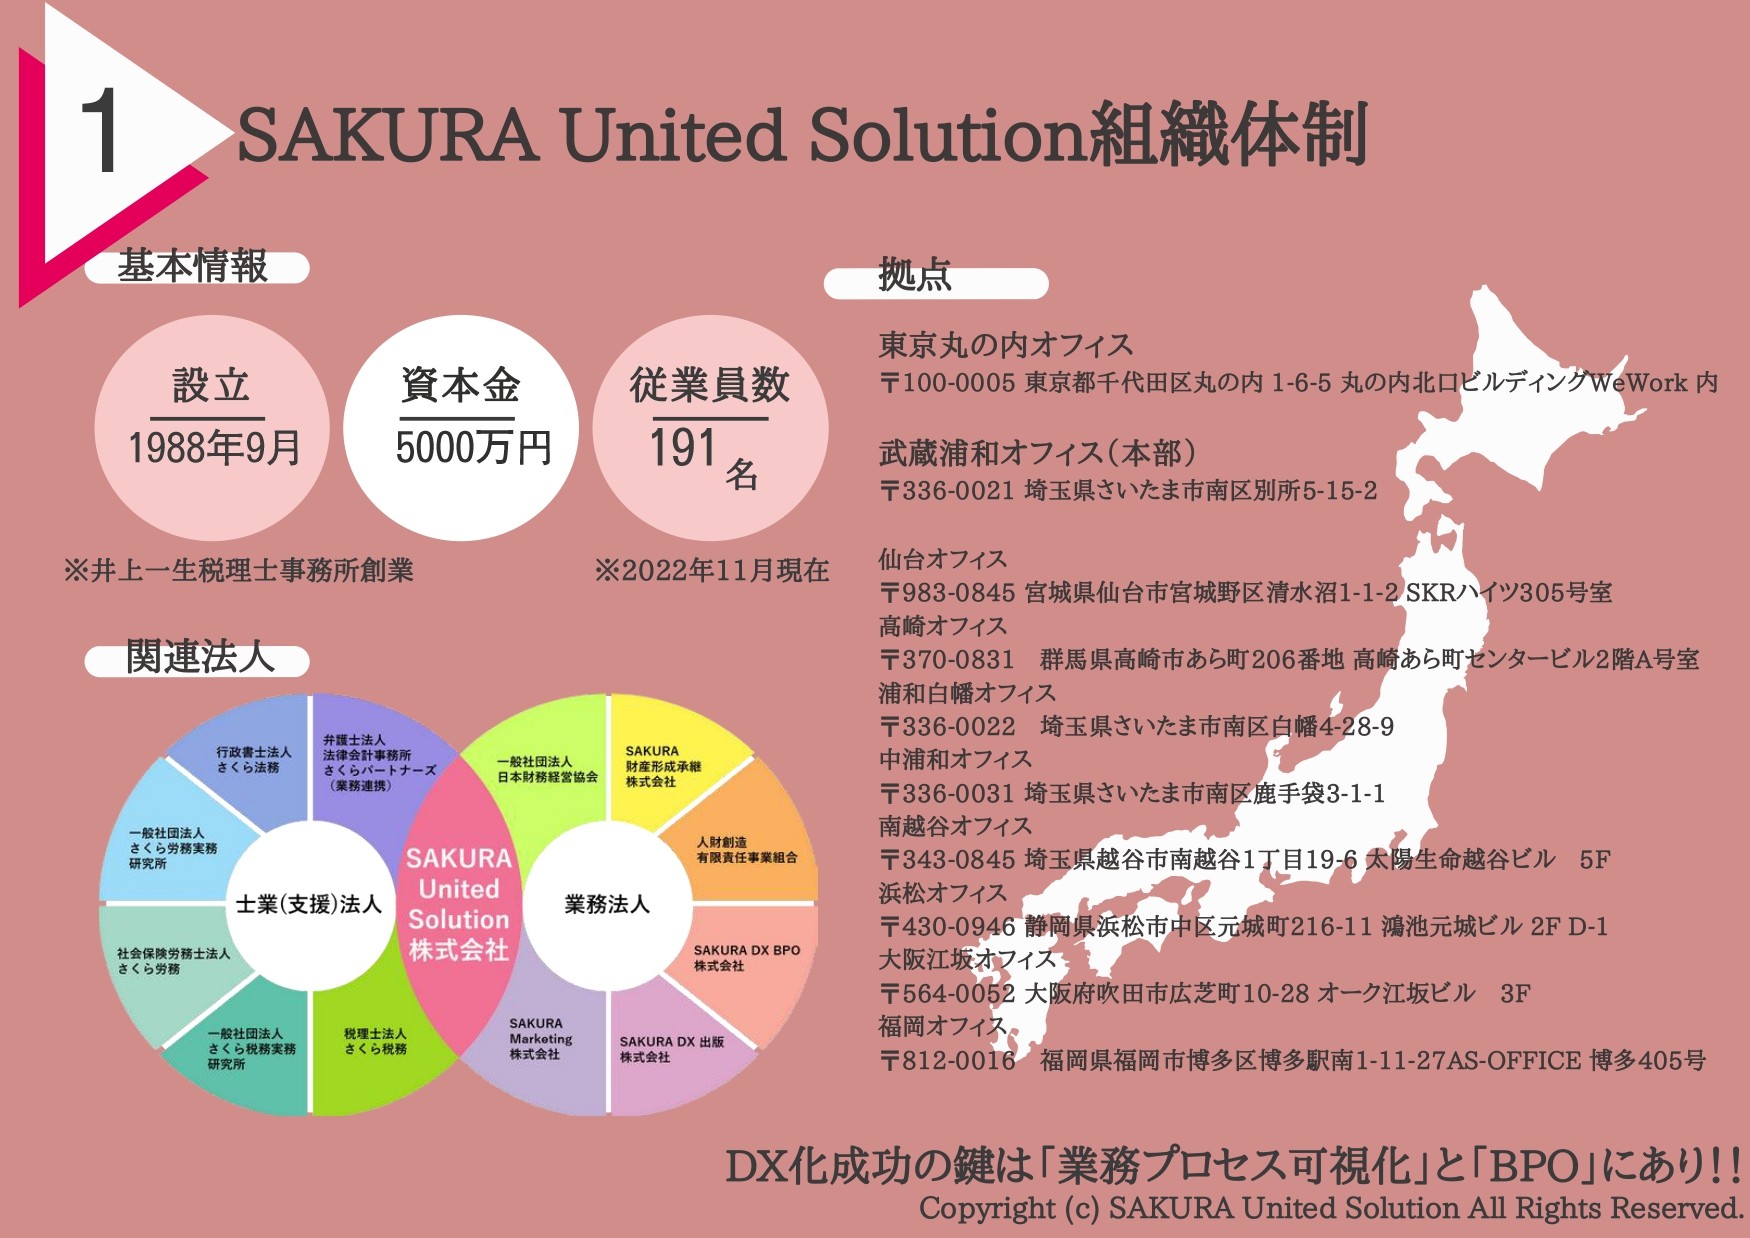 SAKURA United Solution株式会社のSAKURA United Solution株式会社:データ入力・集計サービス